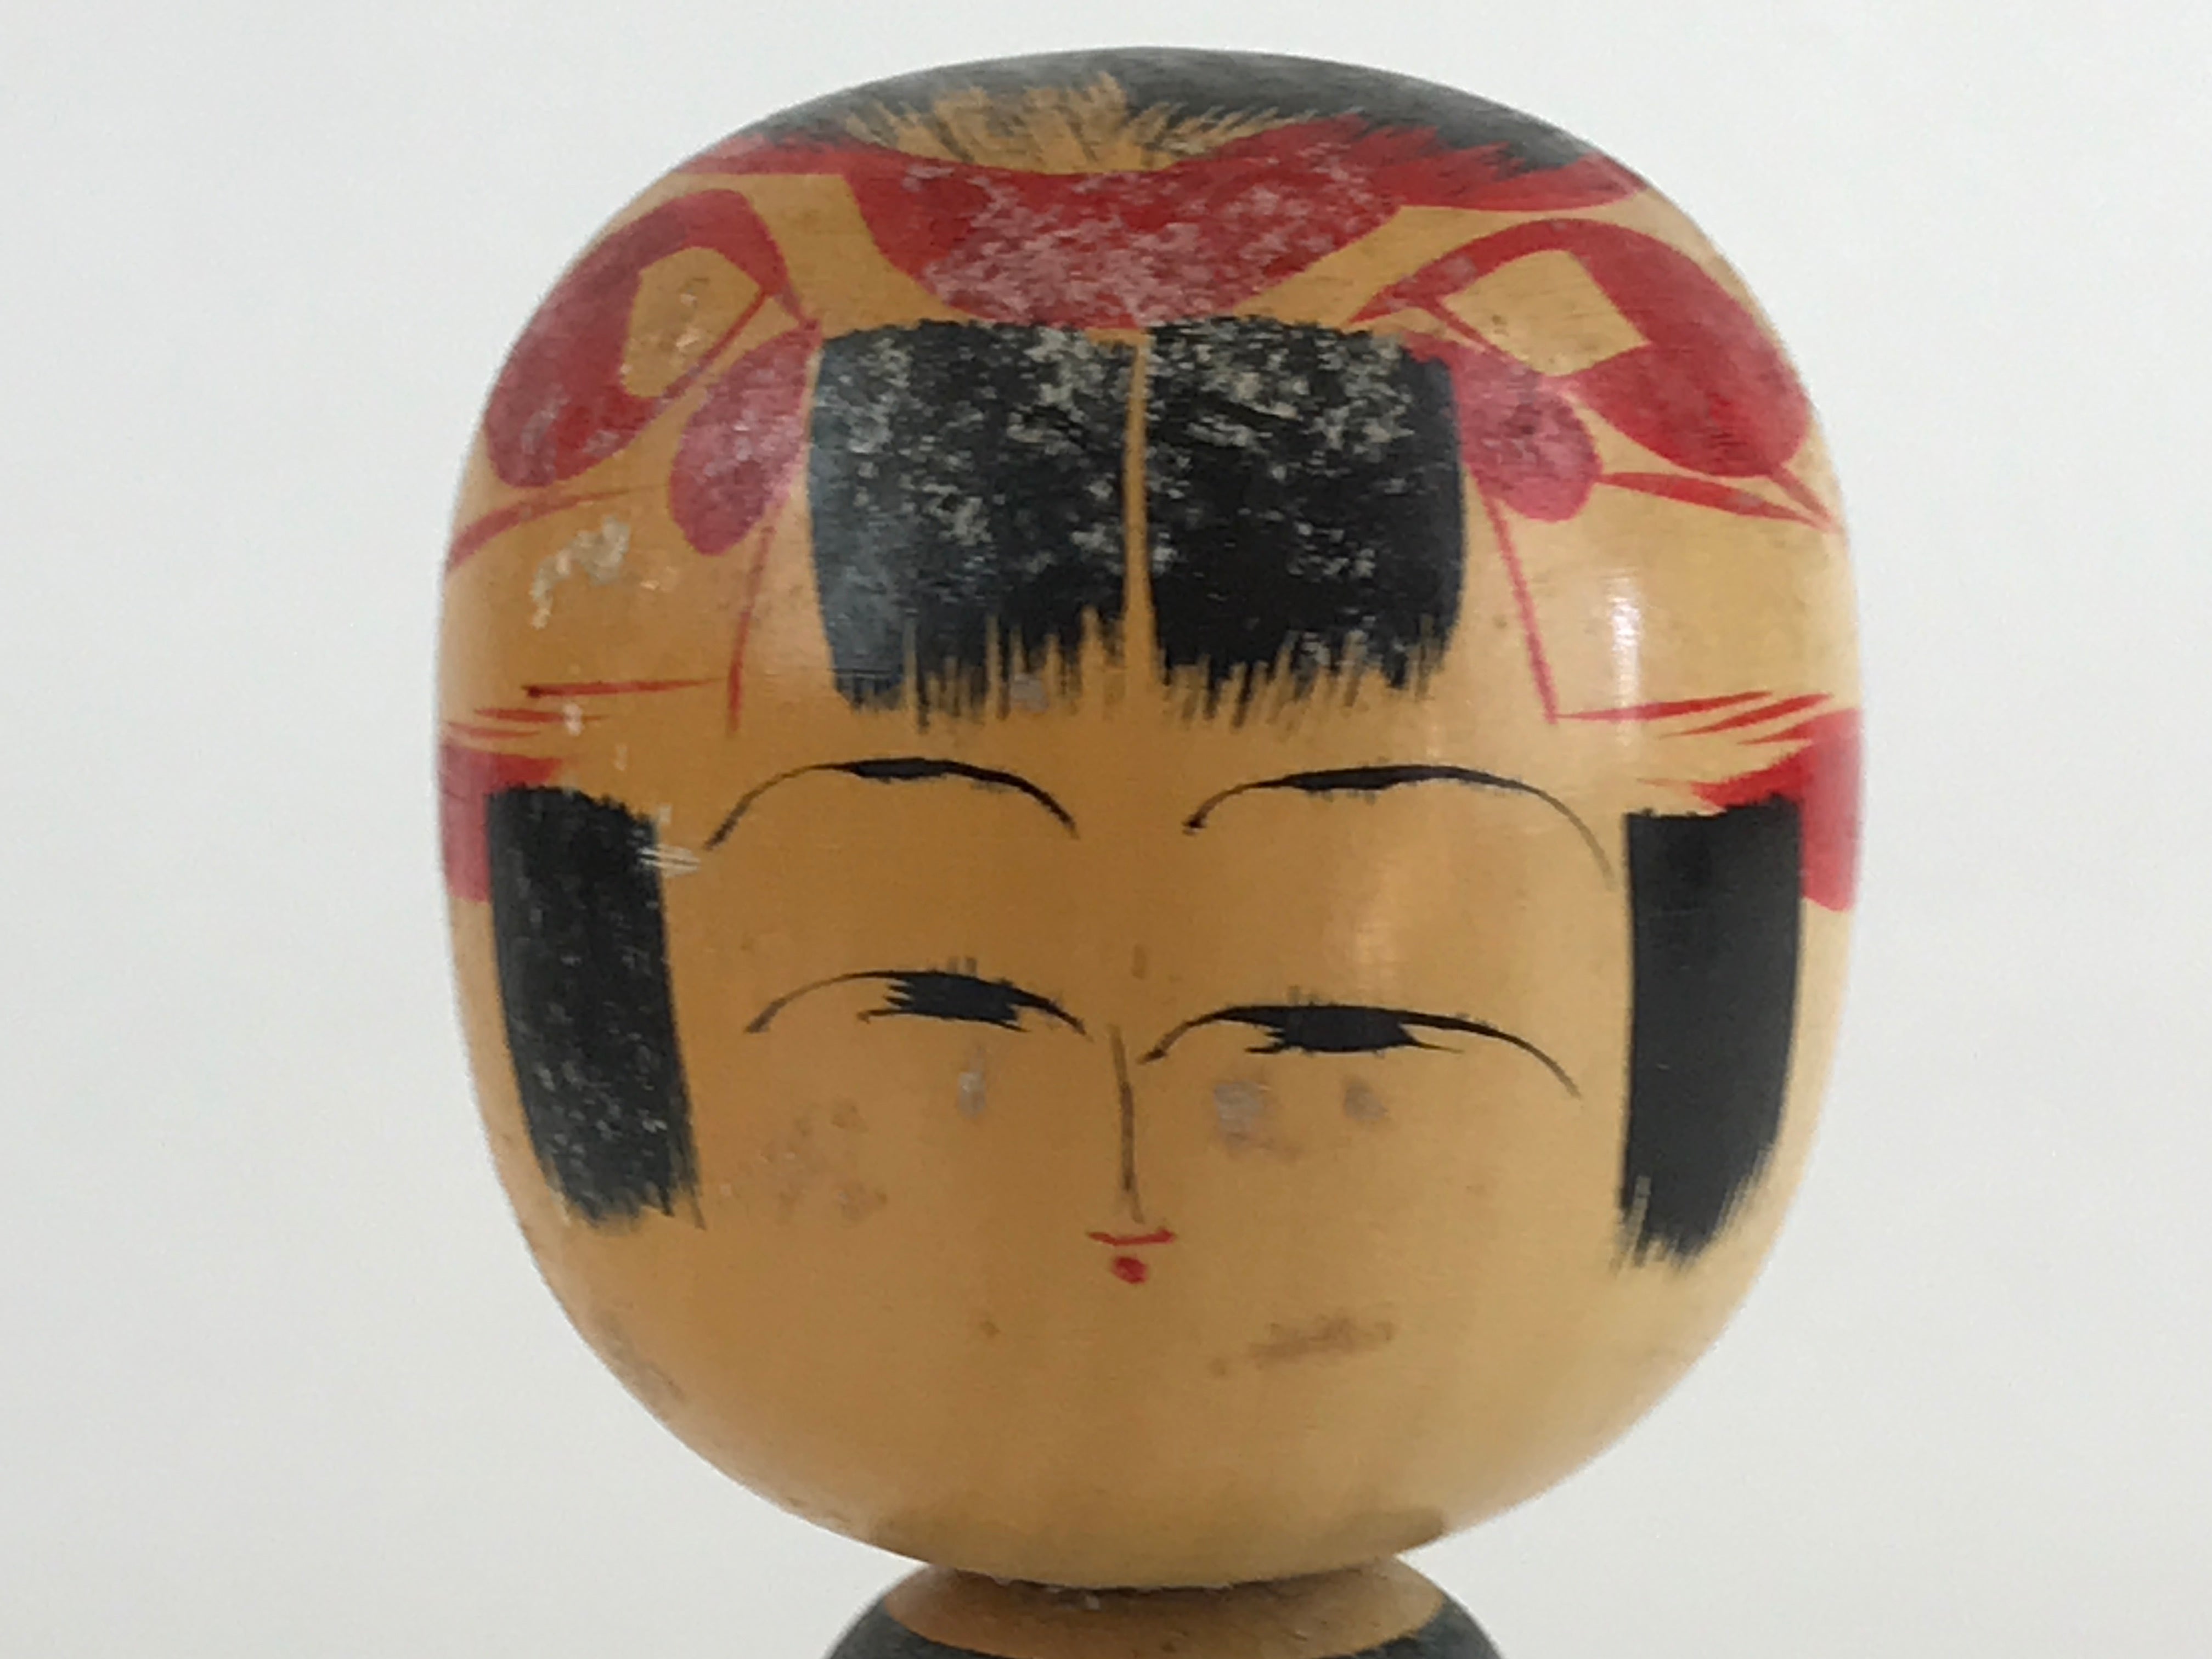 Japanese Wooden Kokeshi Doll Vtg Figurine Traditional Craft Toy KF608